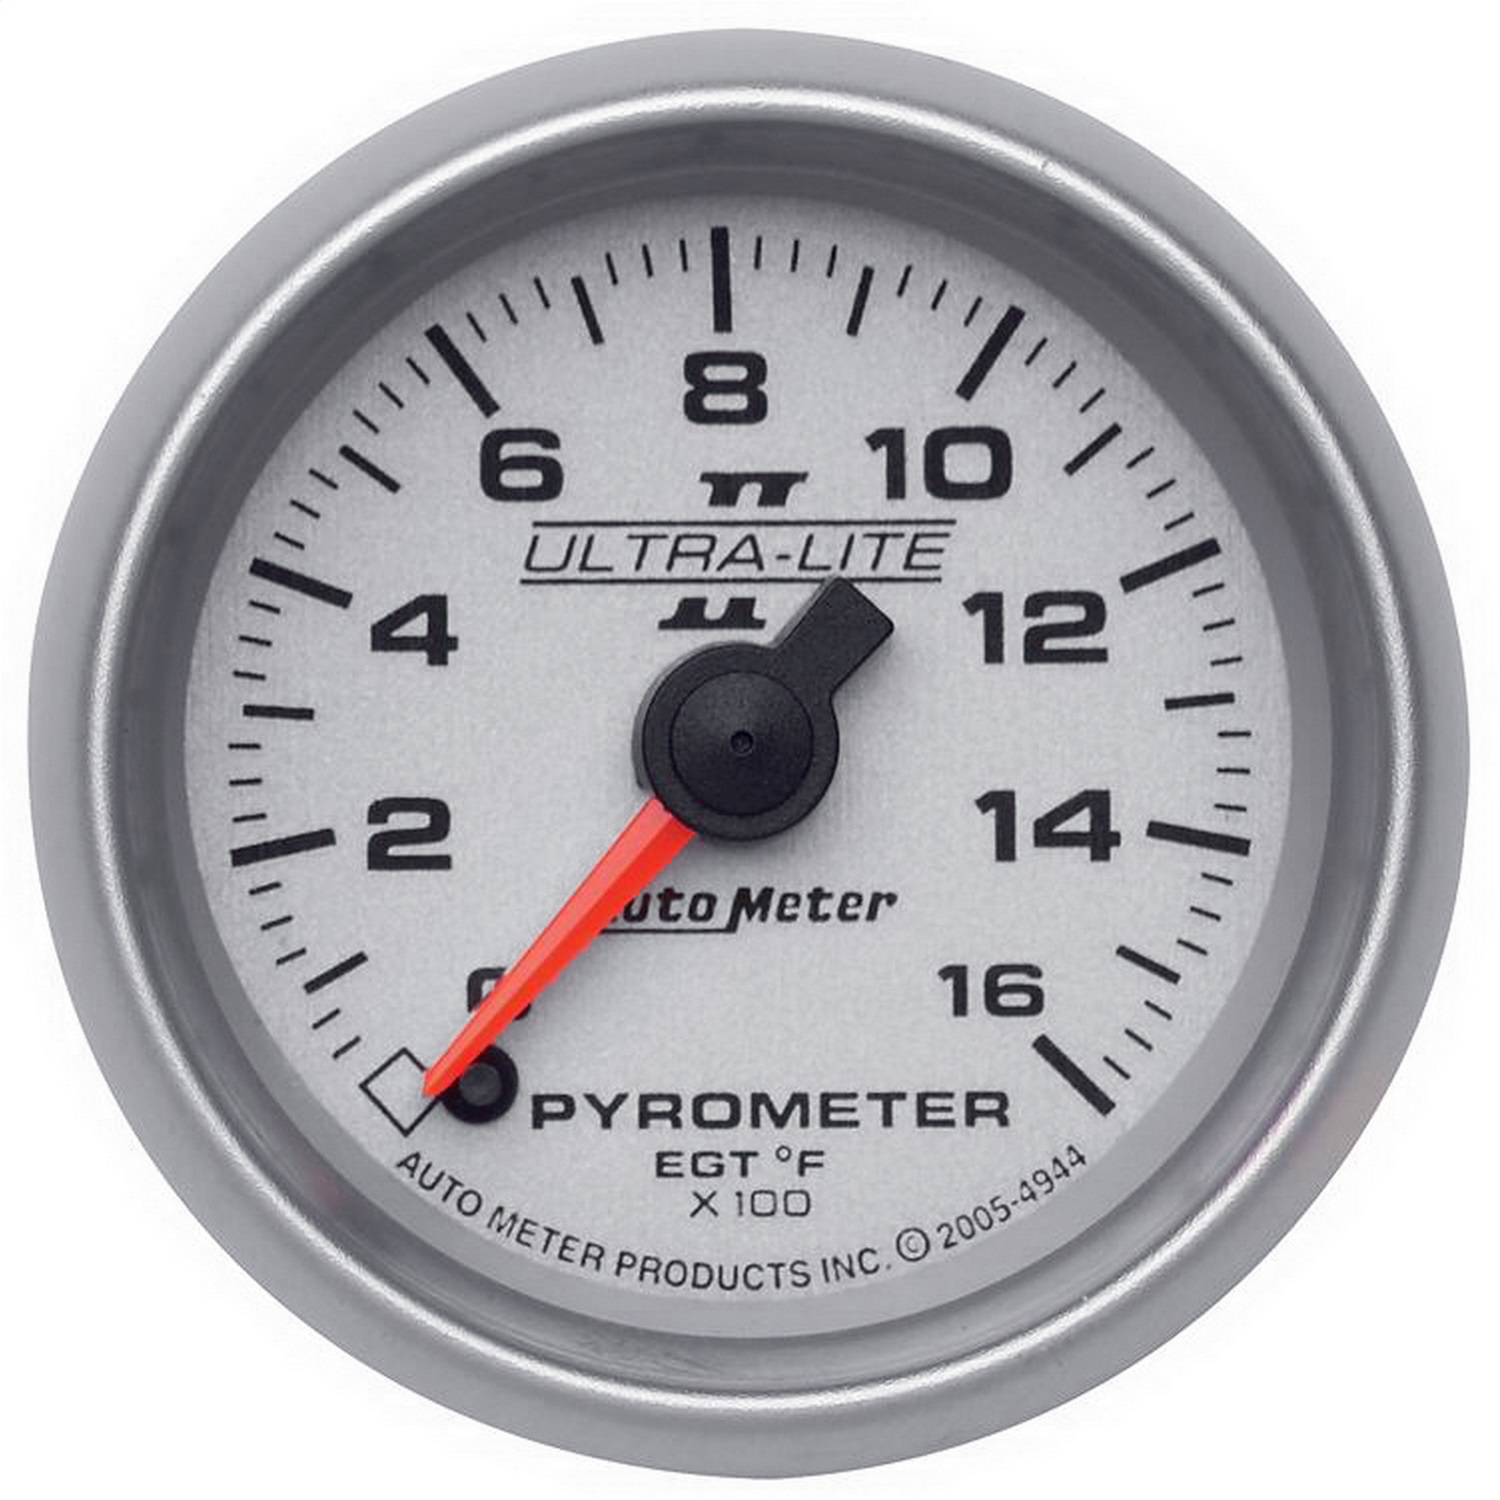 Auto Meter Auto Meter 4944 Ultra-Lite II; Electric Pyrometer Gauge Kit